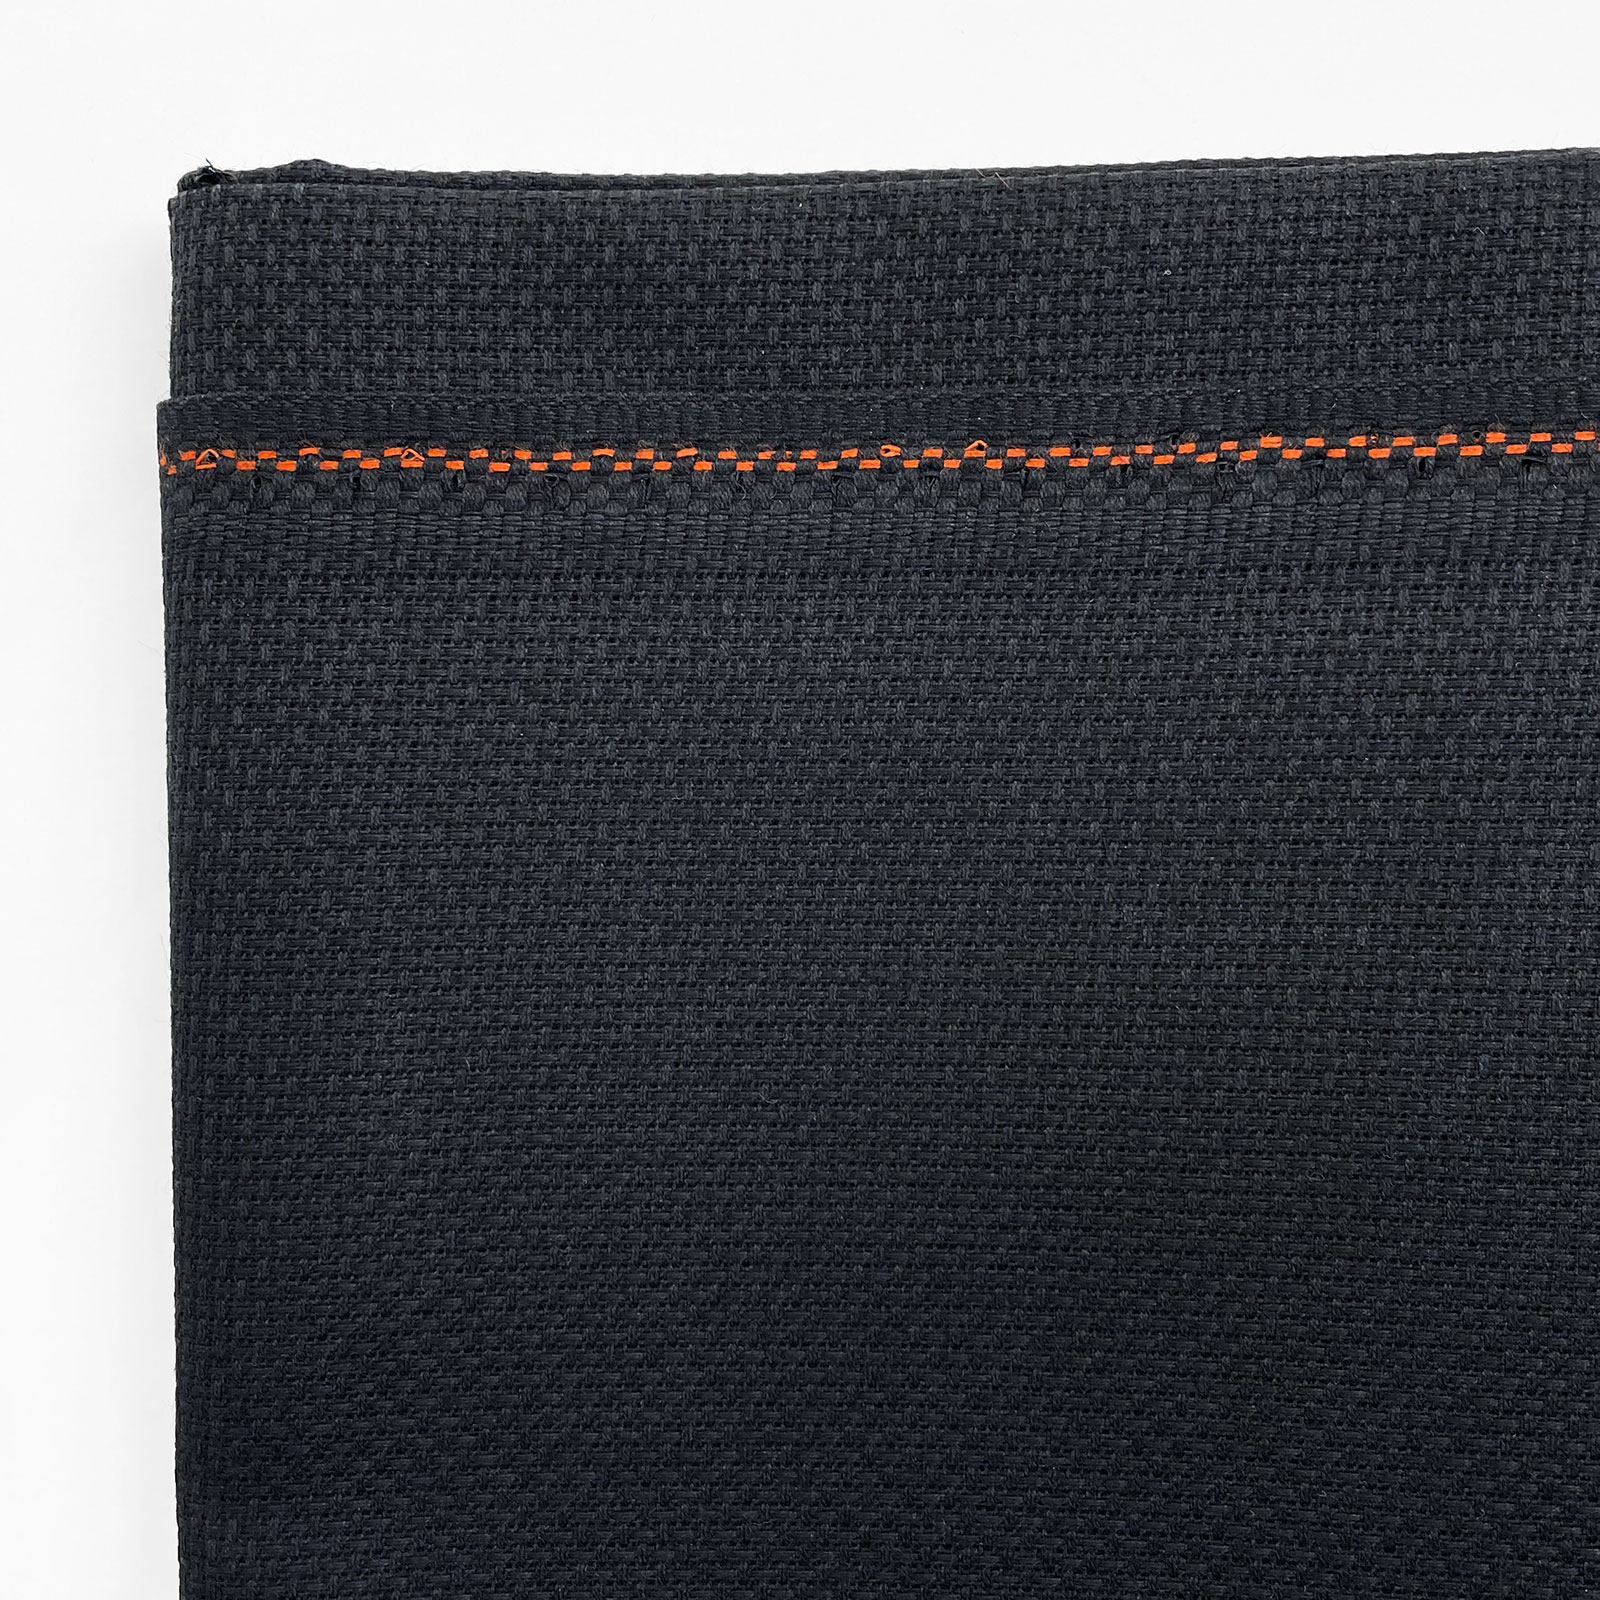 Design Works 14 Count Black Aida Fabric - 15 x 18 inches 3507 - 123Stitch